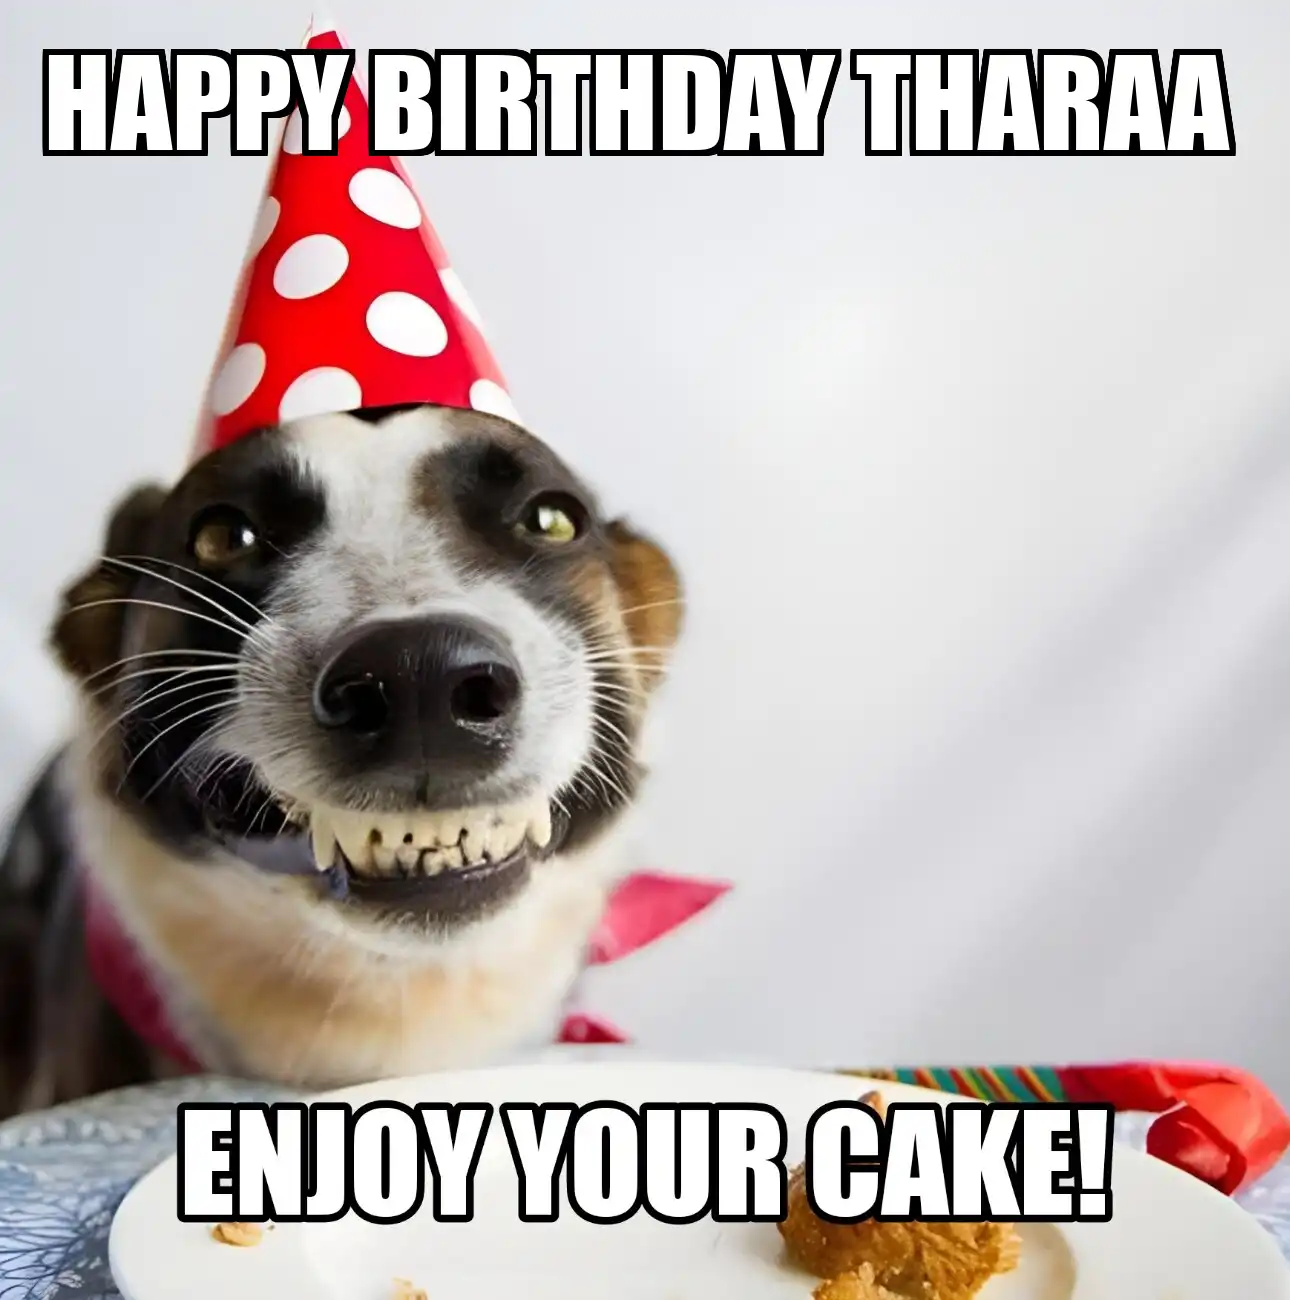 Happy Birthday Tharaa Enjoy Your Cake Dog Meme